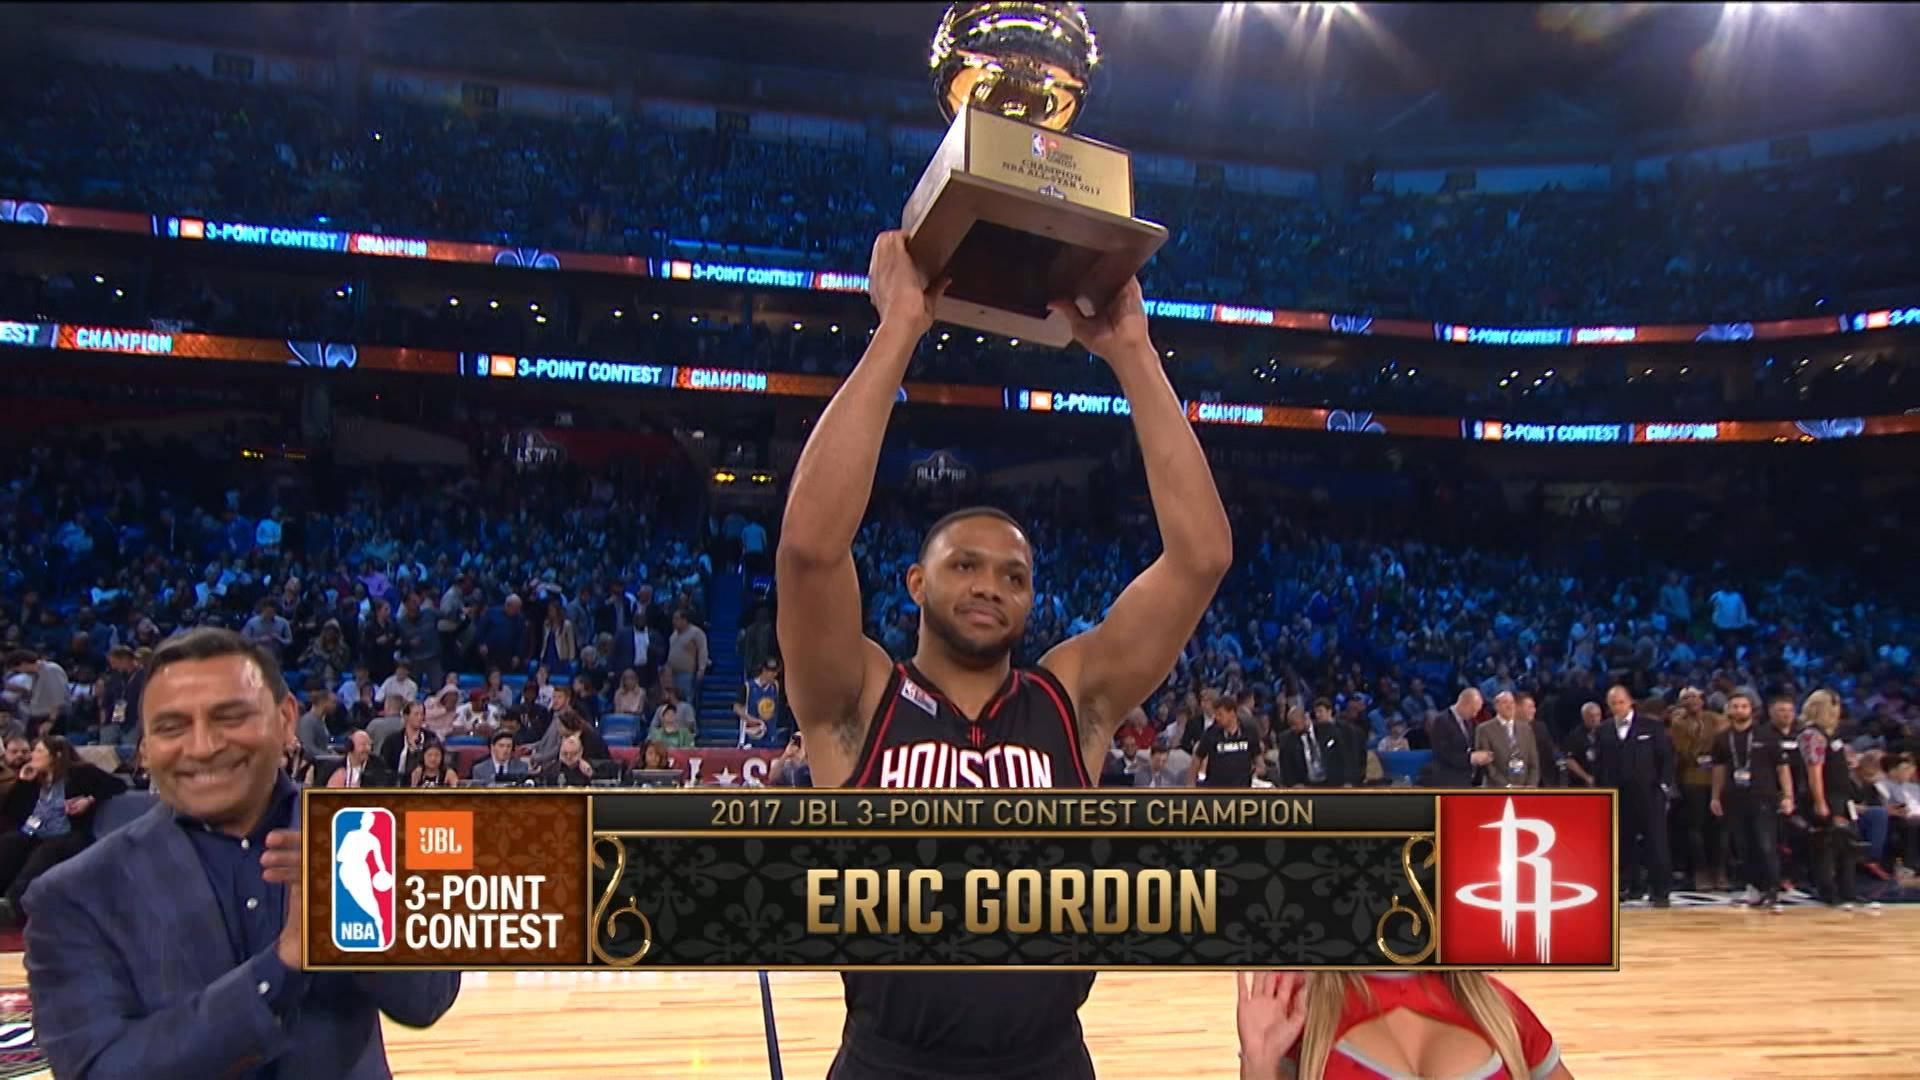 Eric Gordon - The 3-point Contest Champion